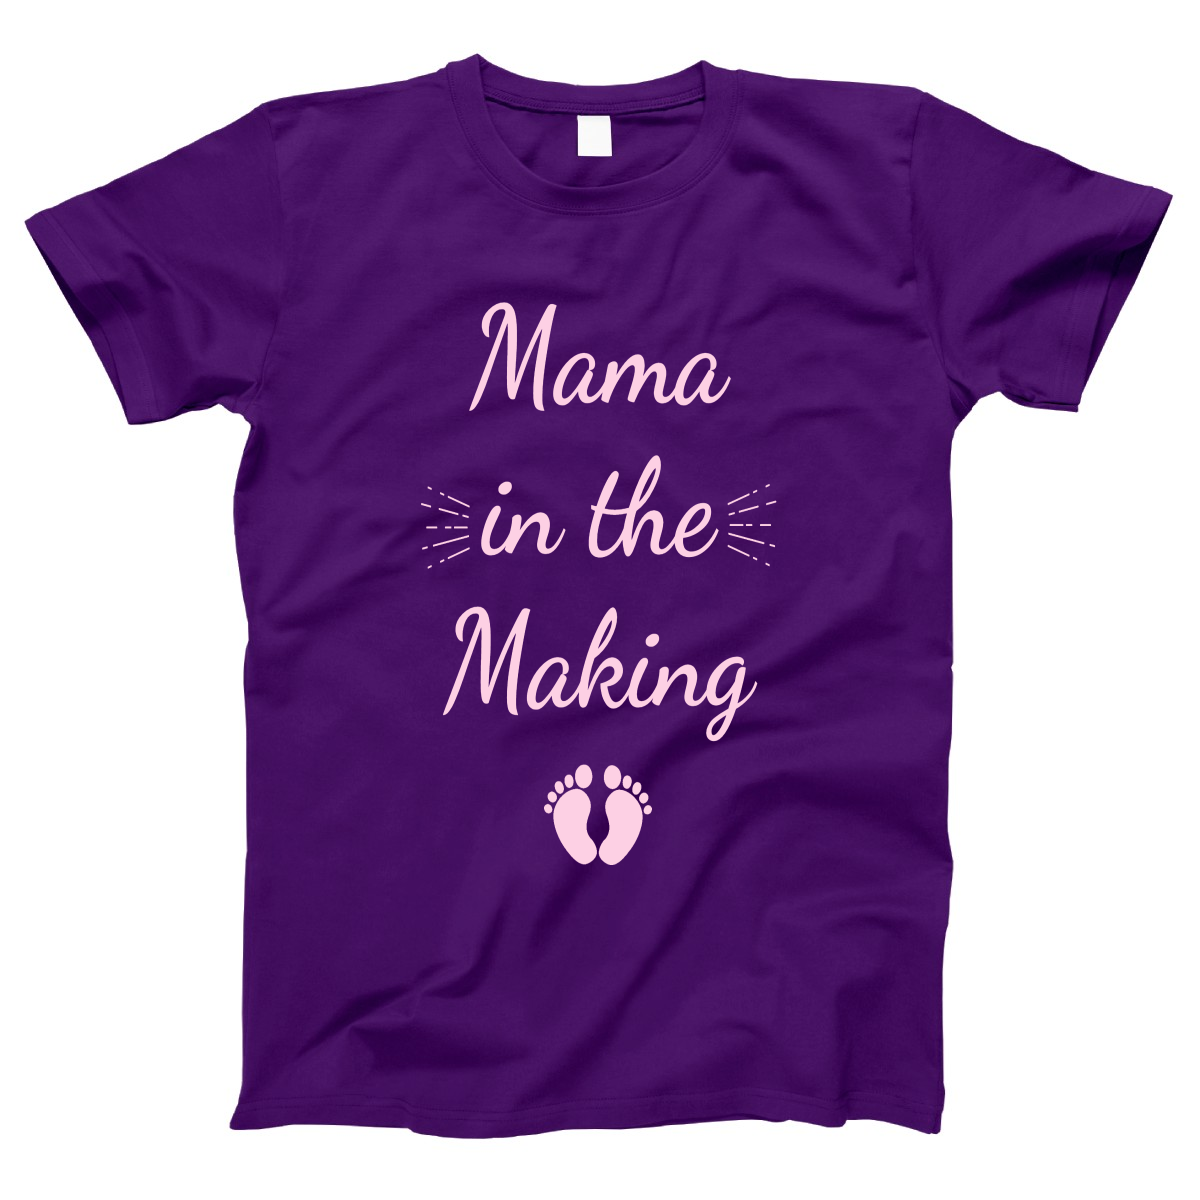 Mama in the Making Shirt Women's T-shirt | Purple